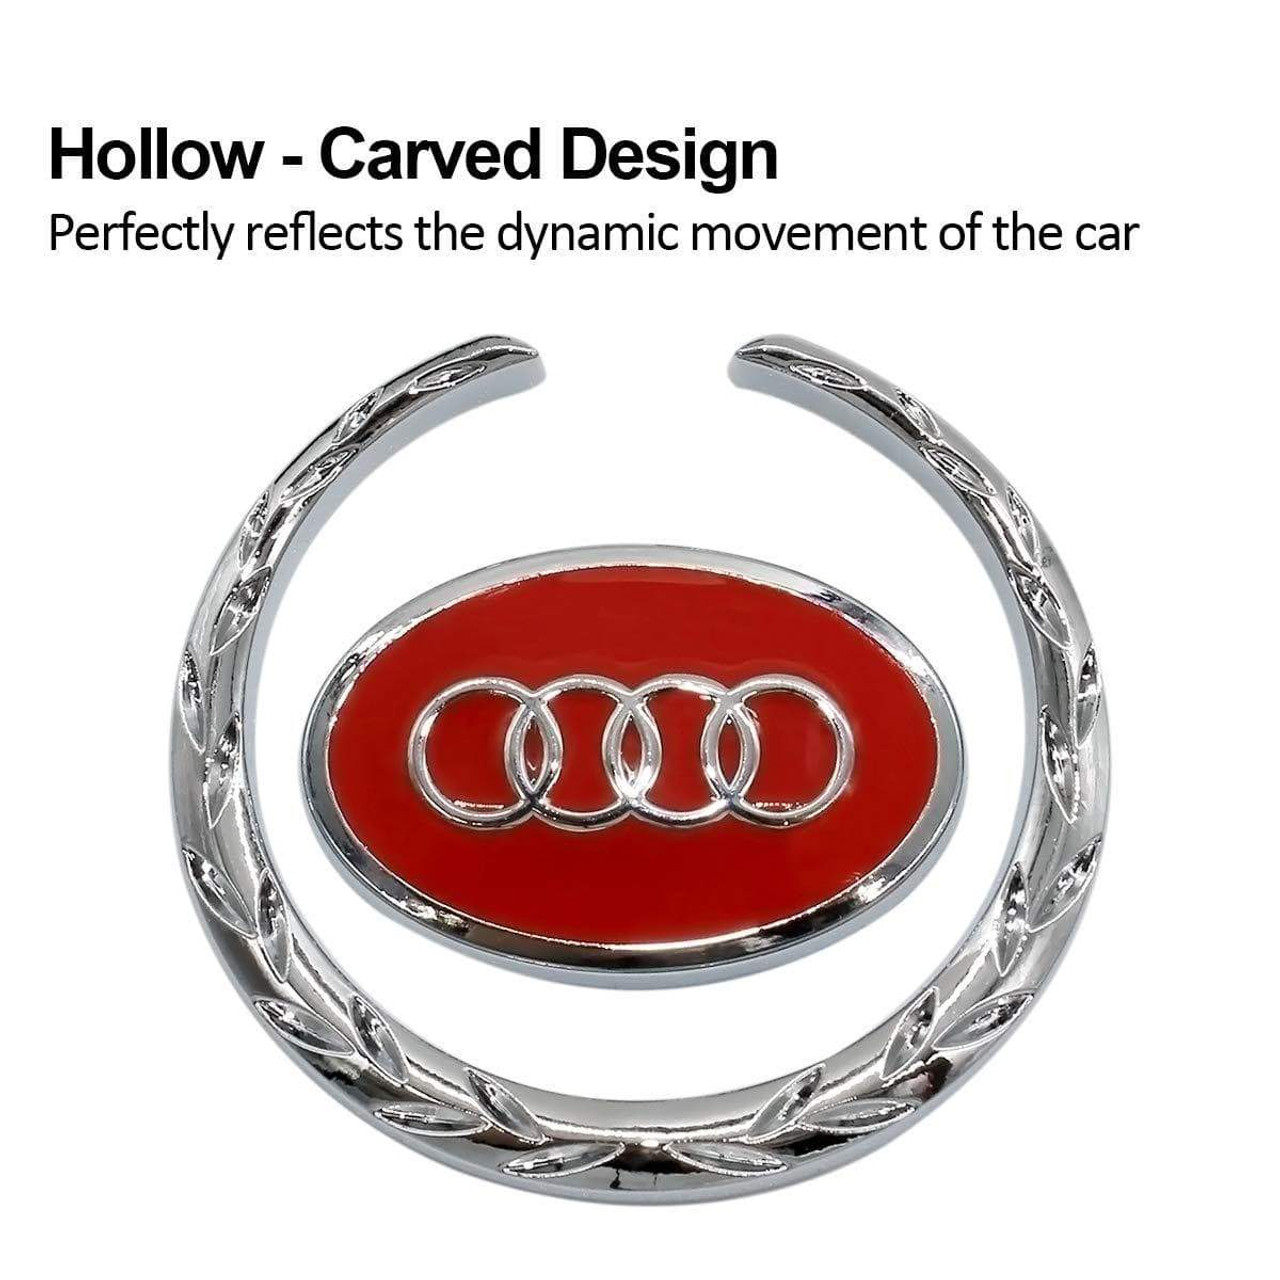 New Audi trademarks hint at revamped emblem